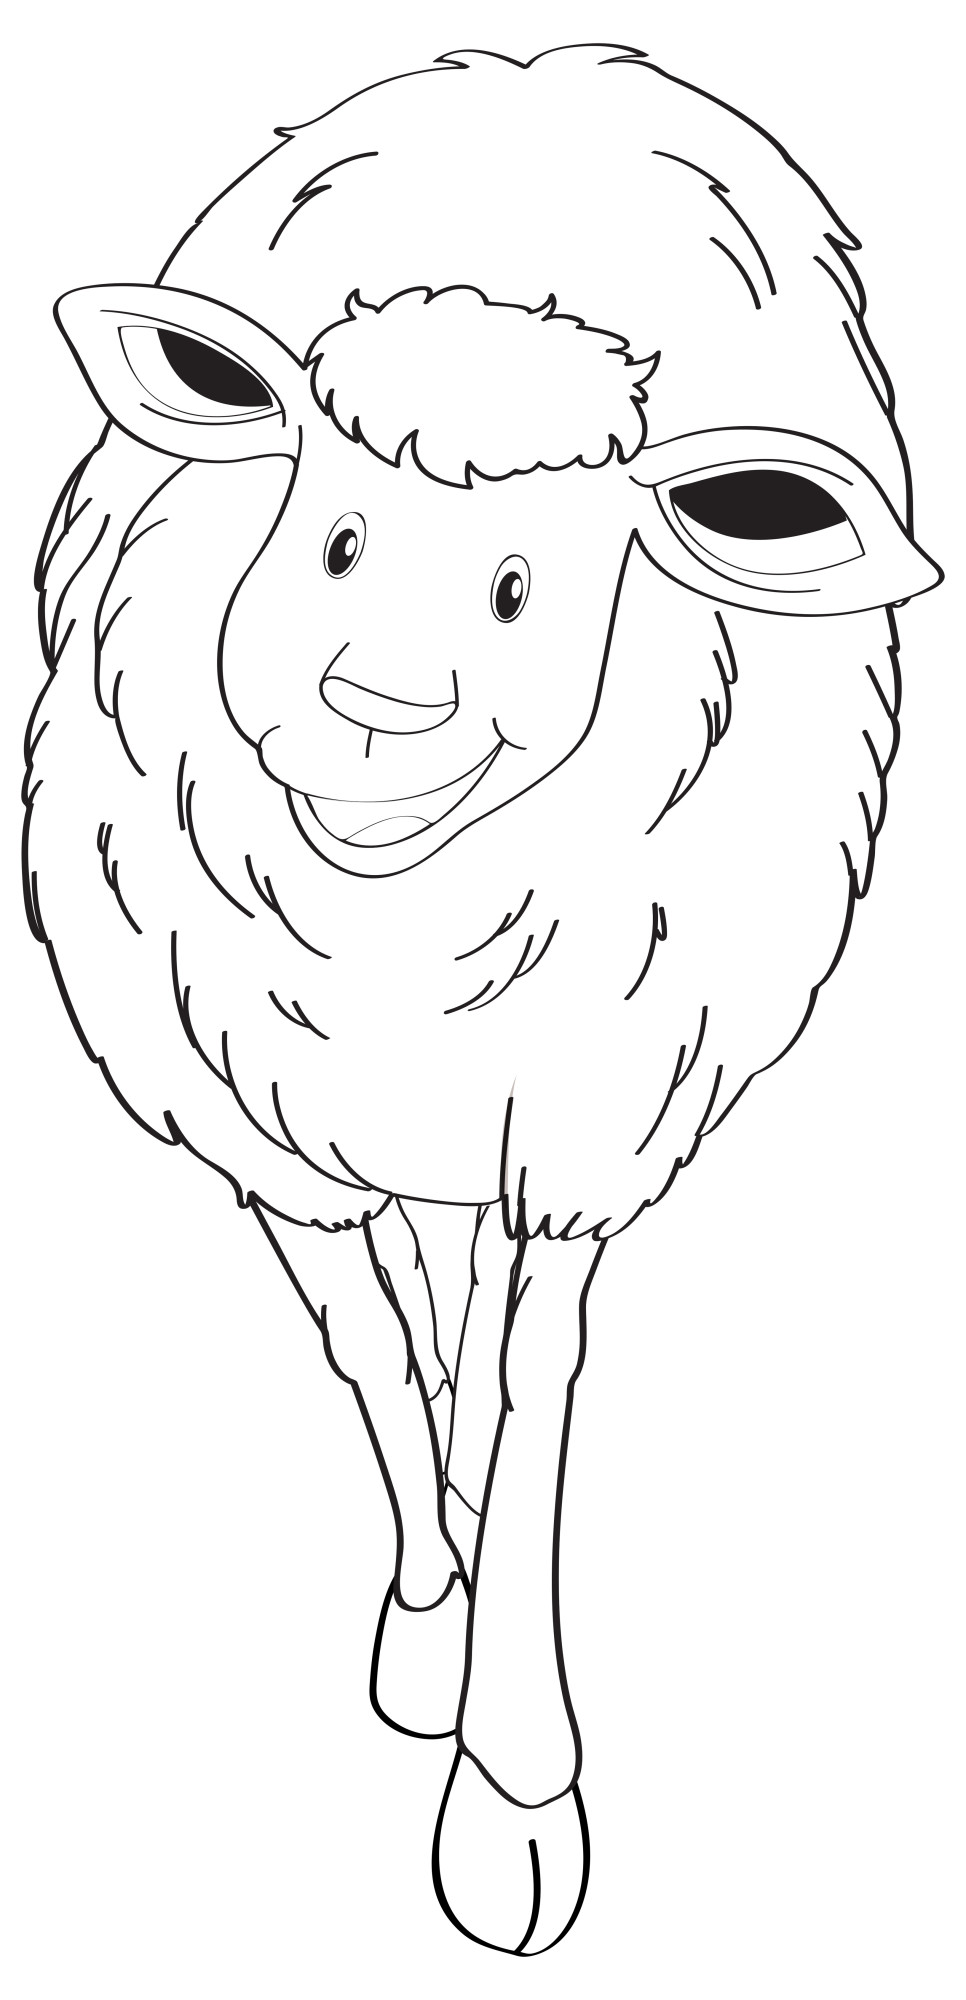 Раскраска для детей: симпатичная горная овца